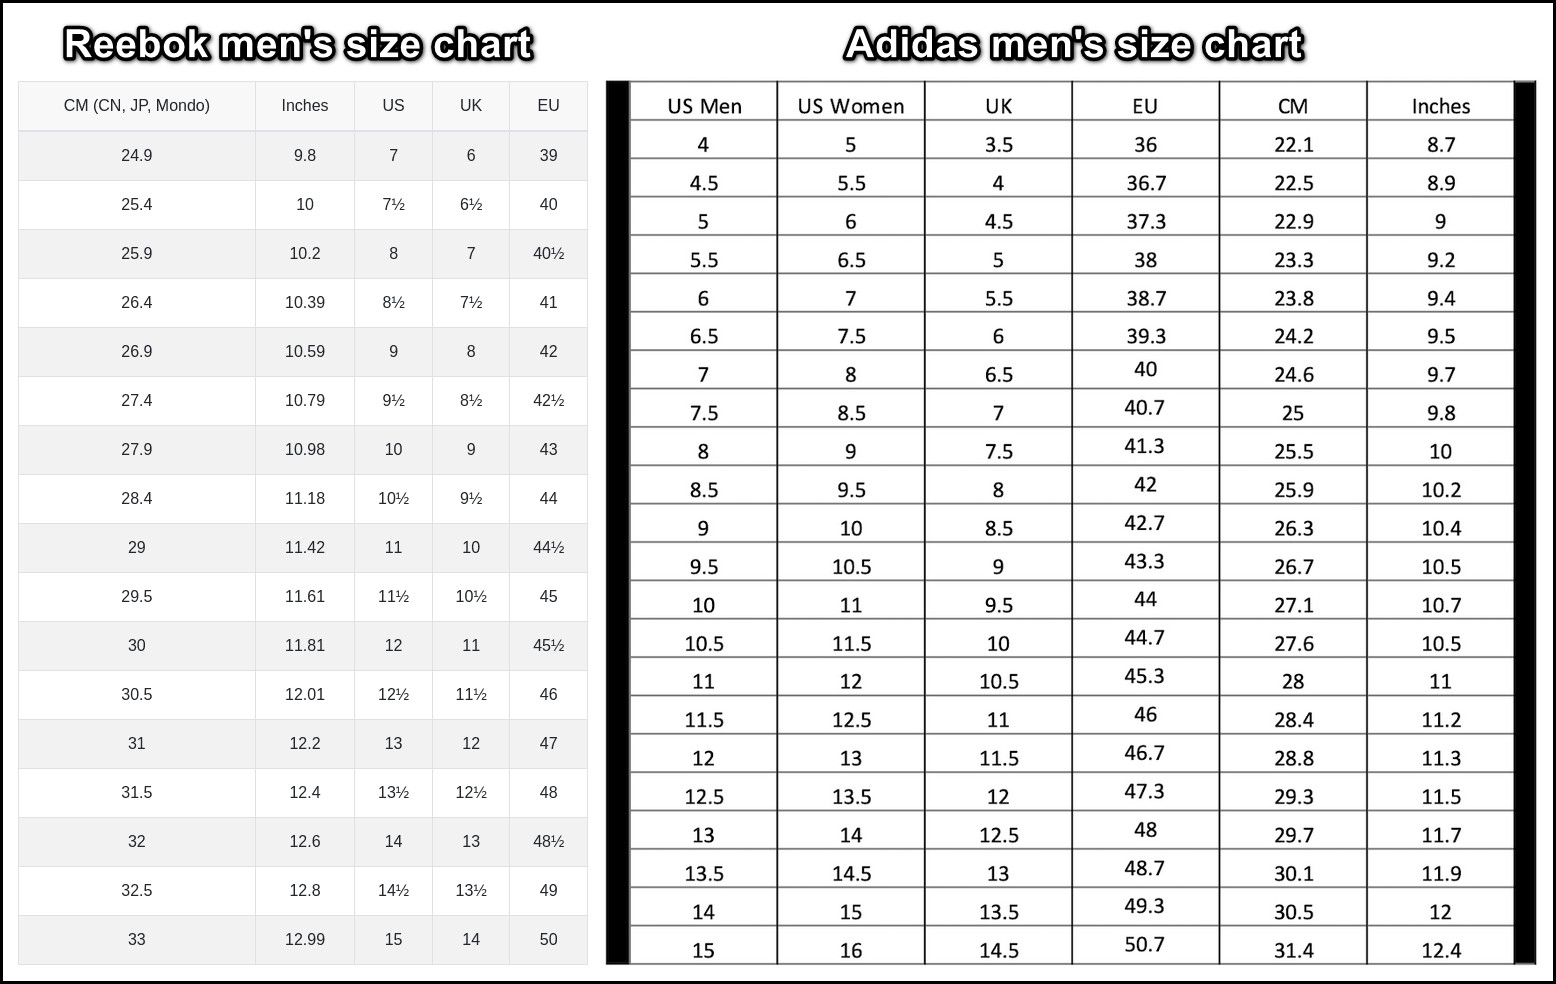 reebok-and-adidas-men’s-size-chart